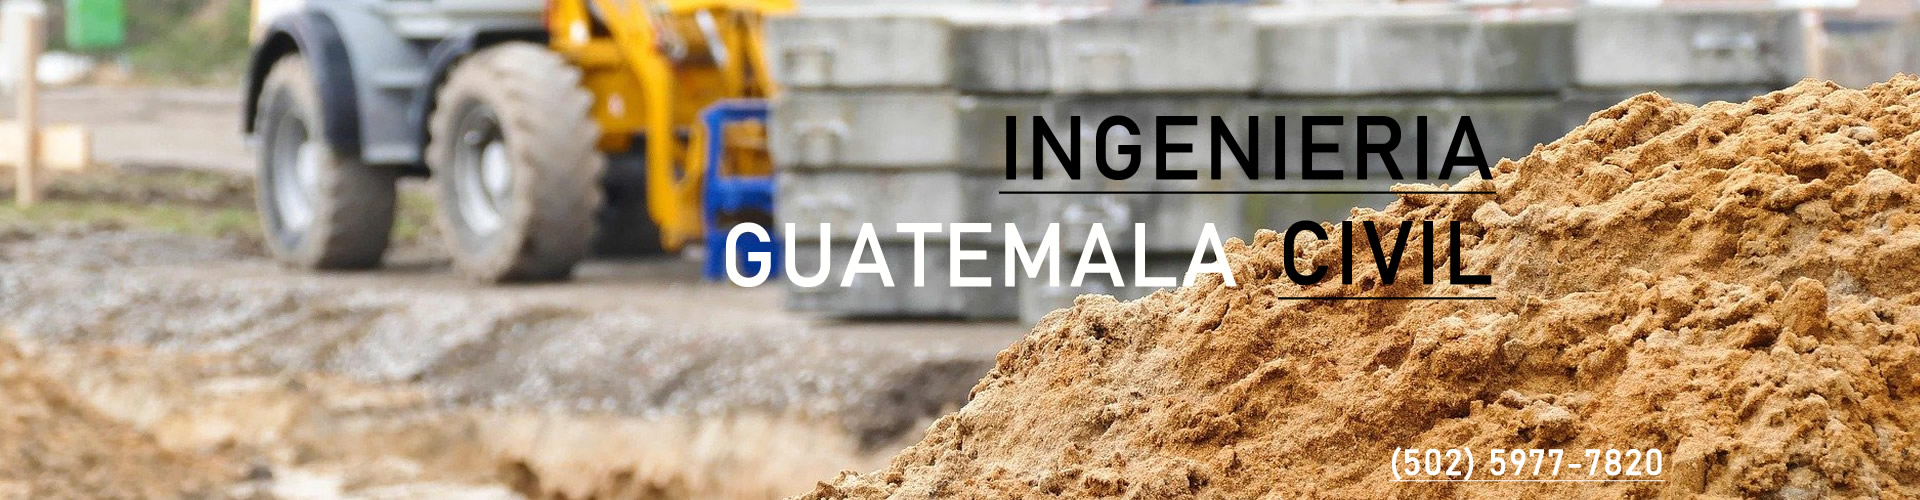 ConstrucciÃ³n, EjecucciÃ³n de Proyectos para construcciÃ³n en Guatemala